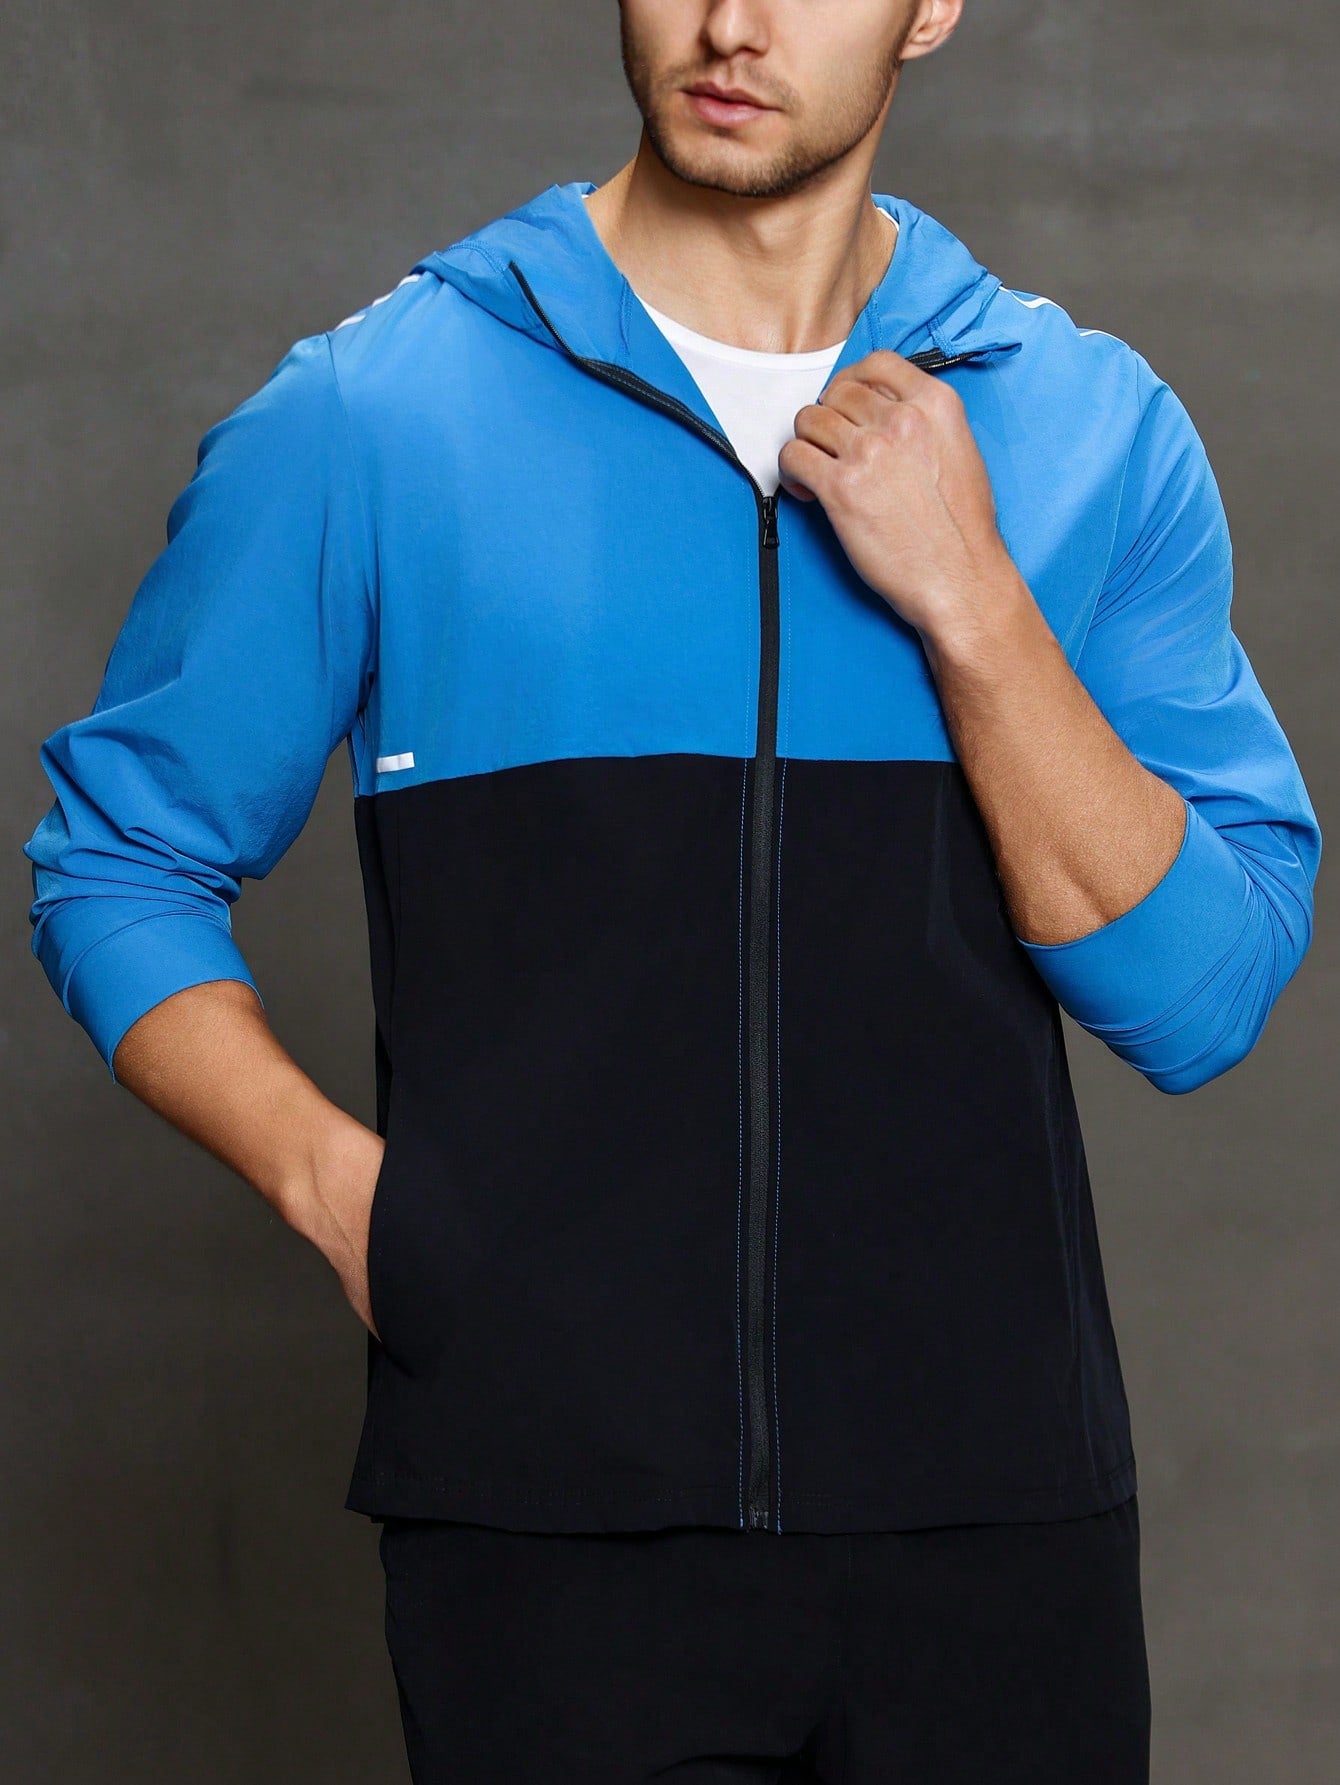 Men's Color Block Zipper Closure Hooded Sport Jacket Workout Tops